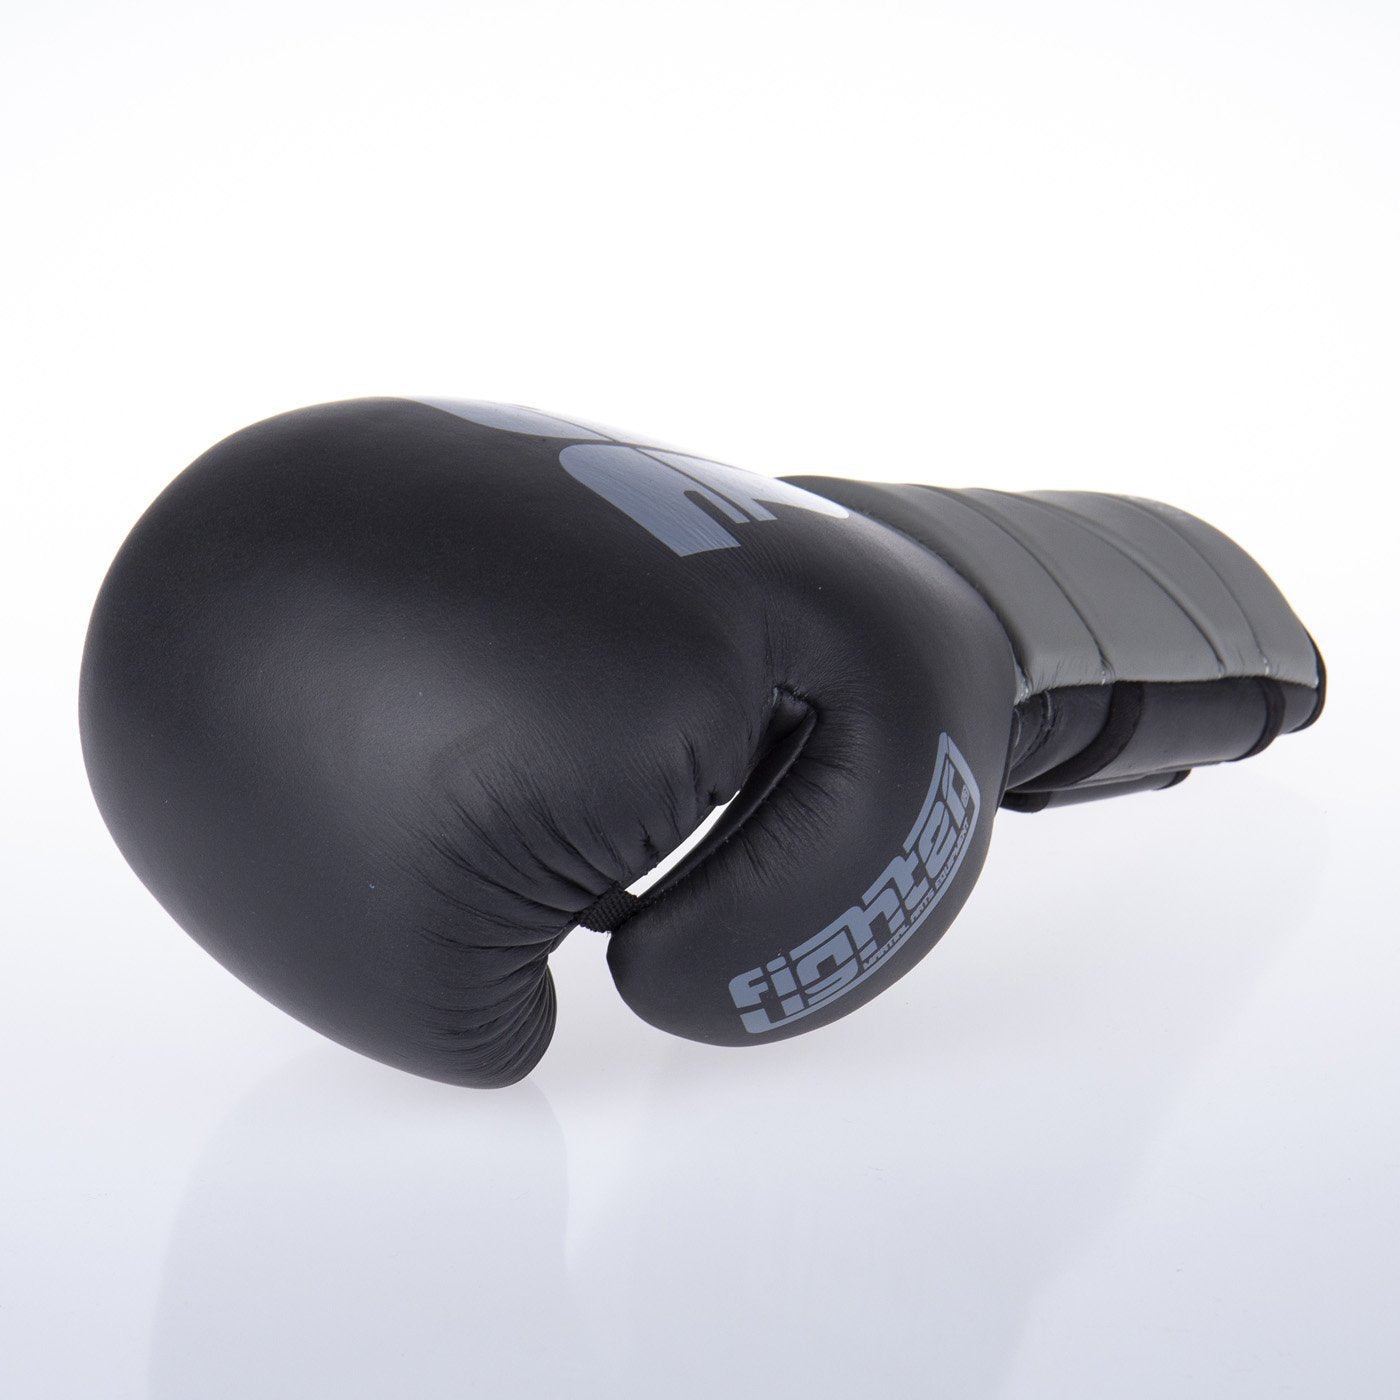 Fighter Boxing Gloves Sparring - black/grey